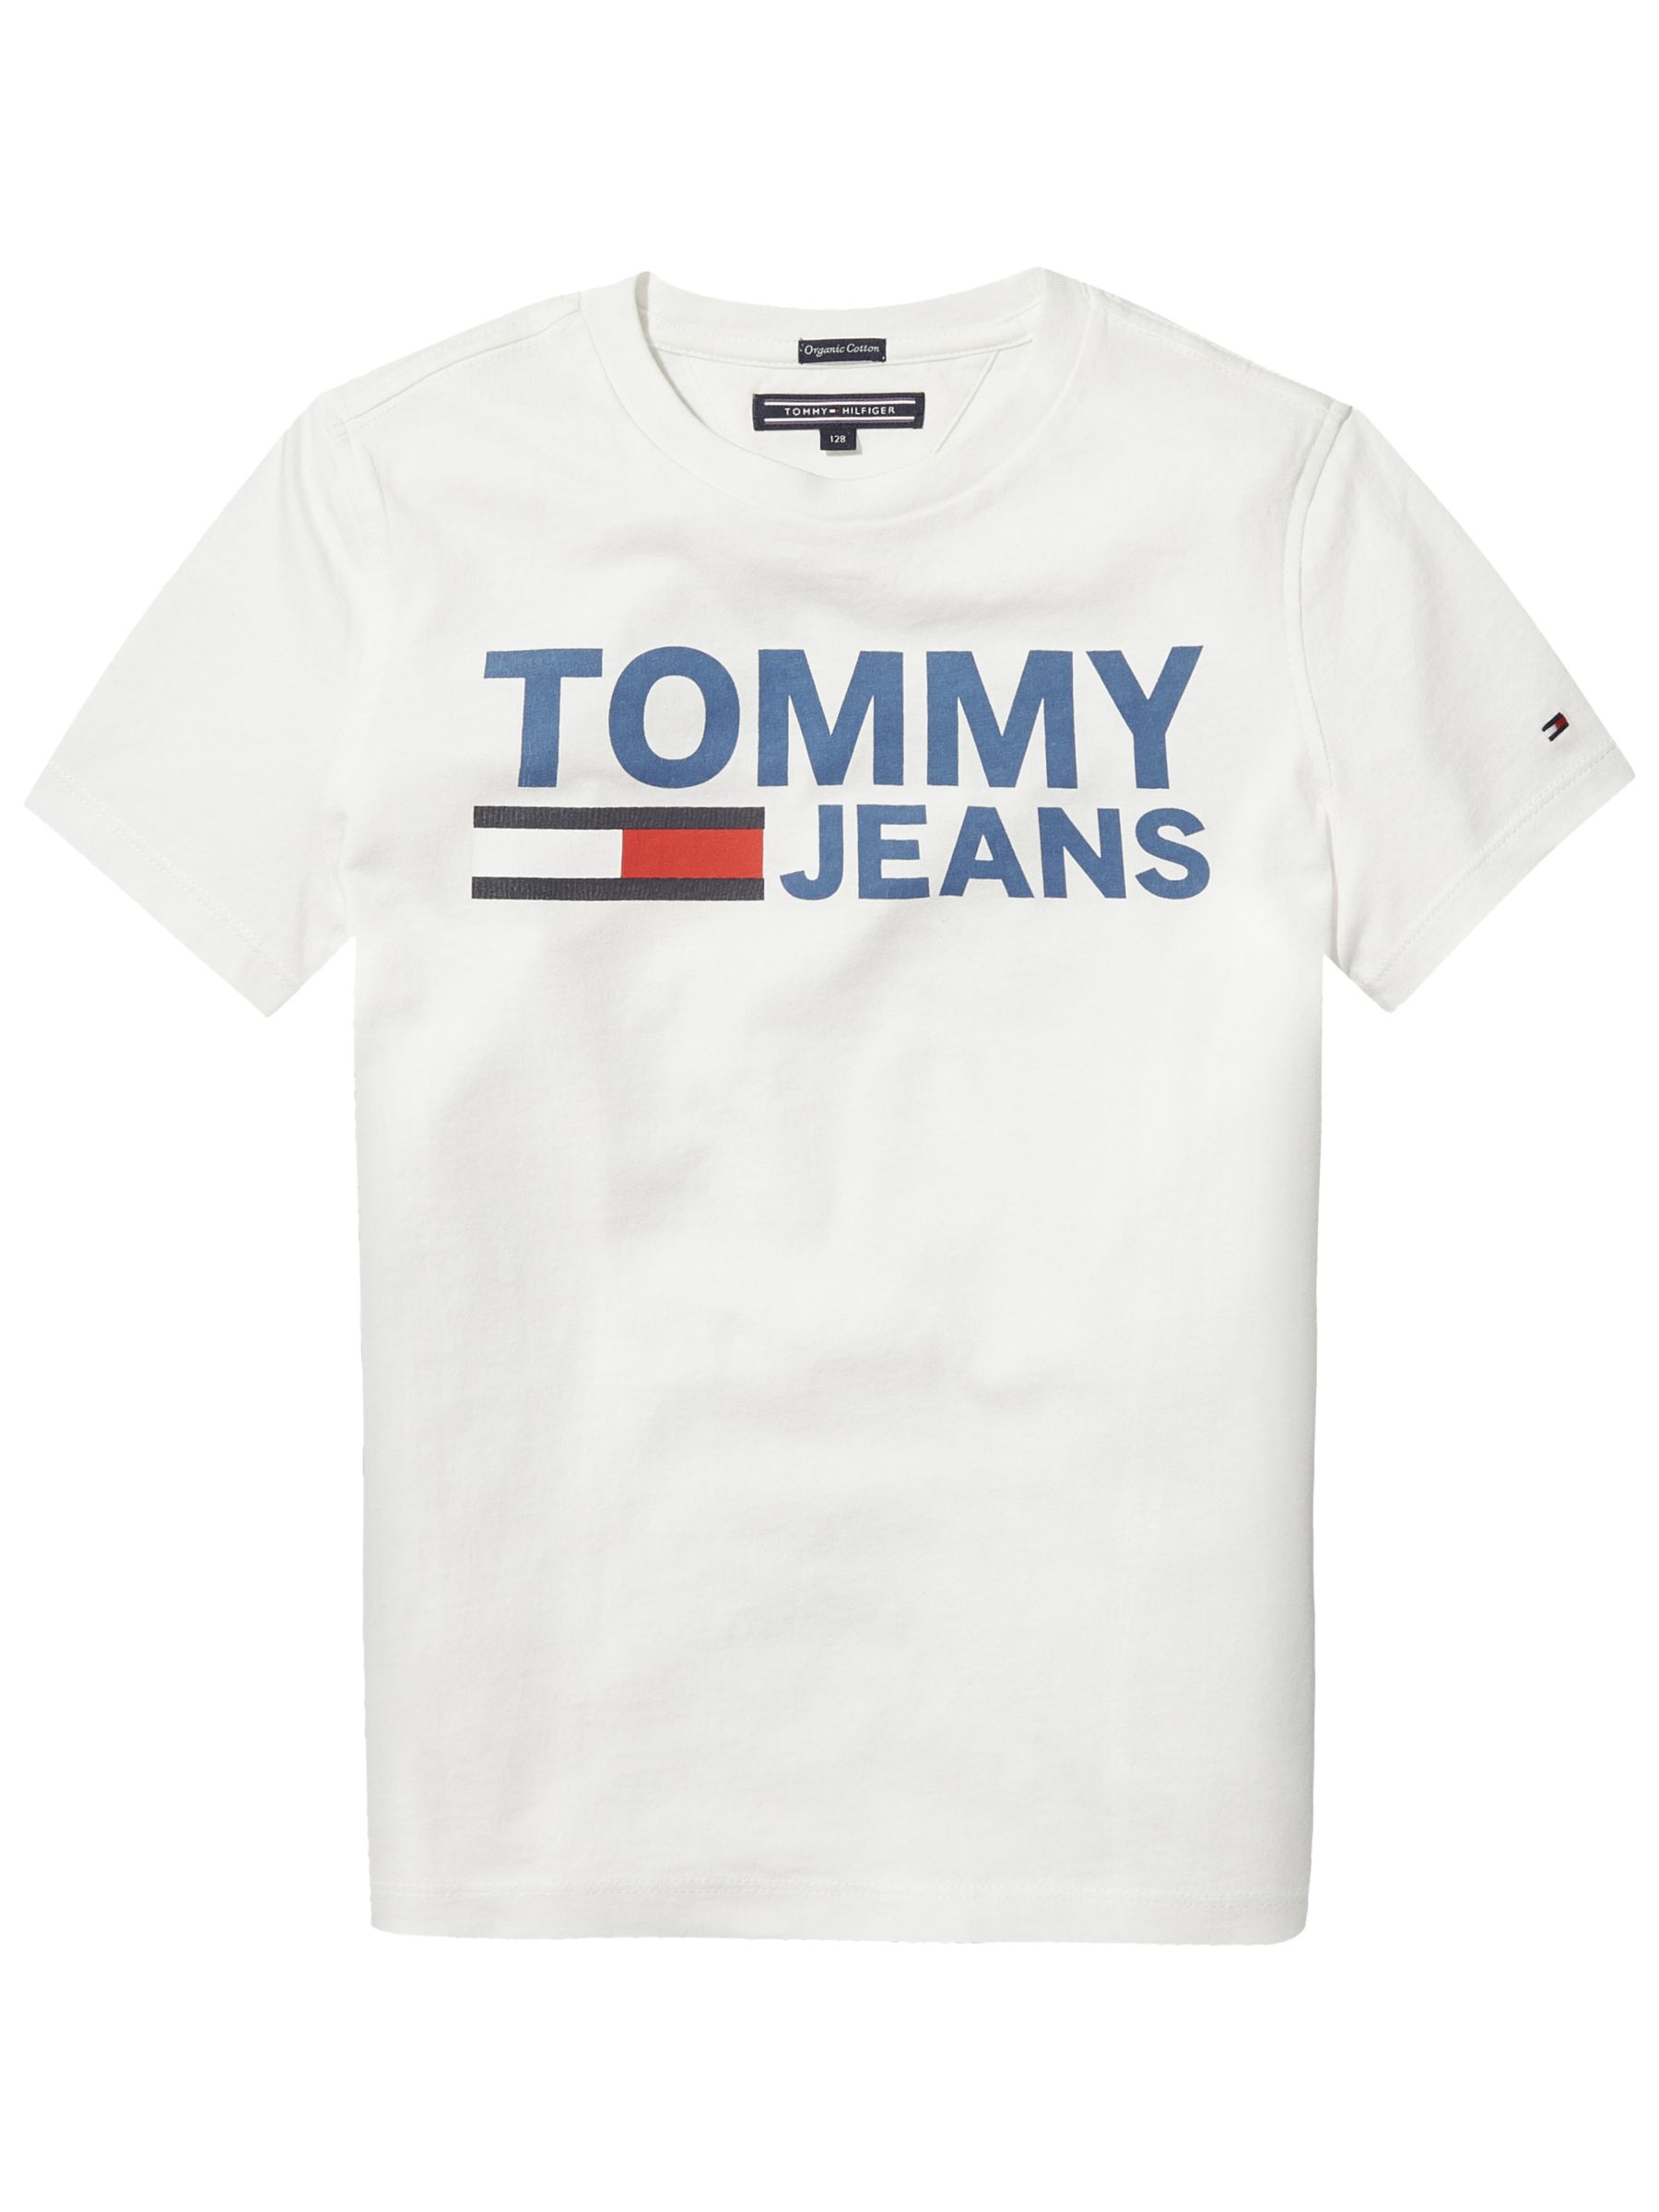 tommy boy shirts